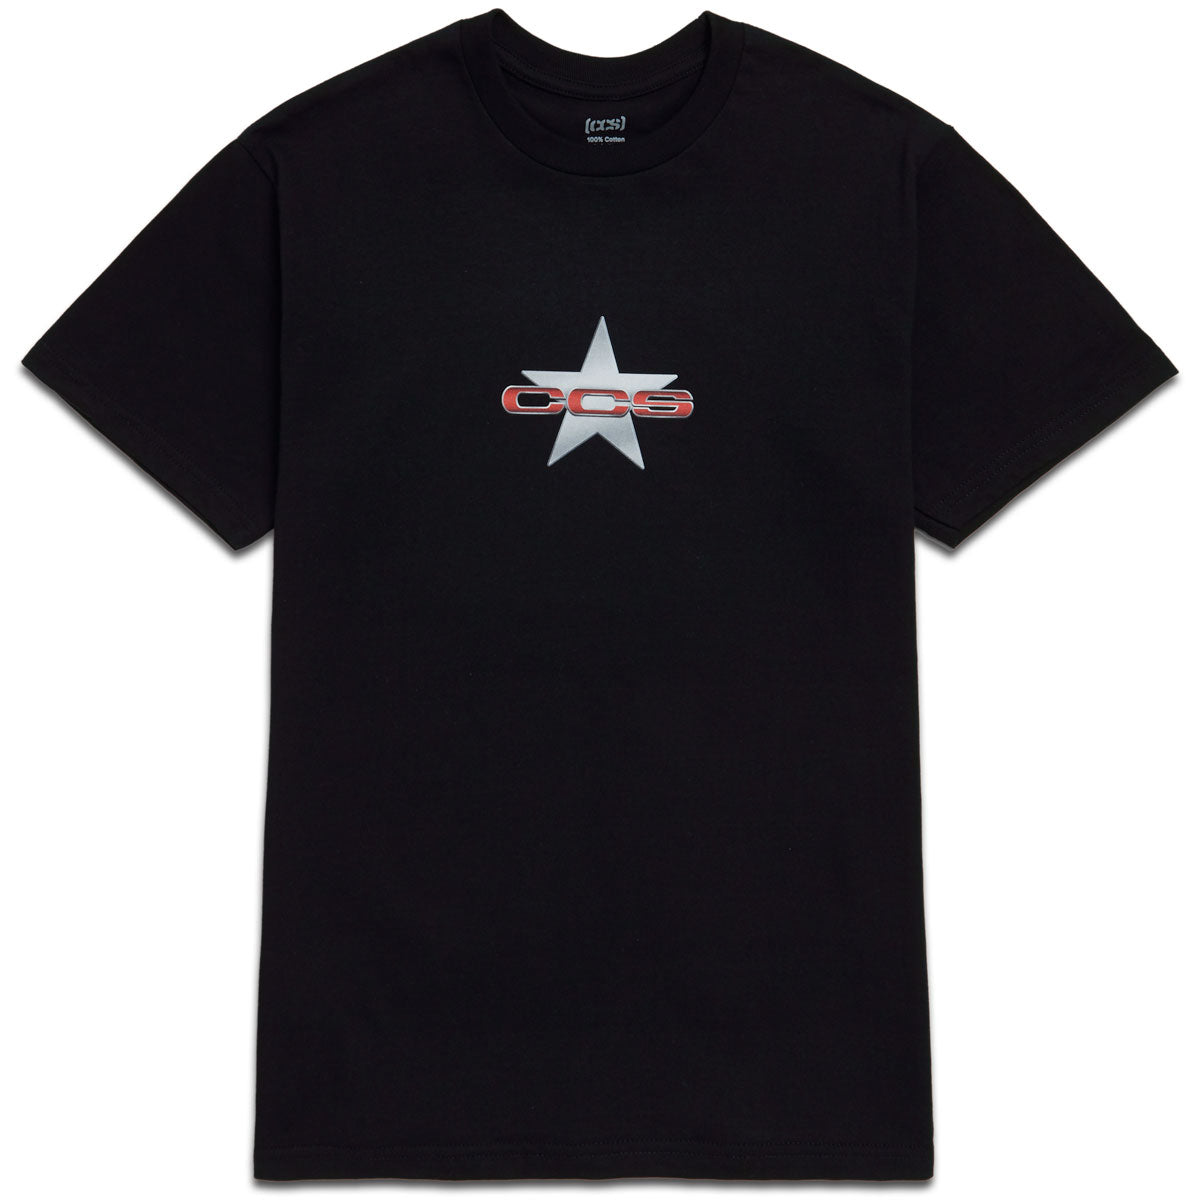 CCS 97 Star T-Shirt - Black - XXL image 1